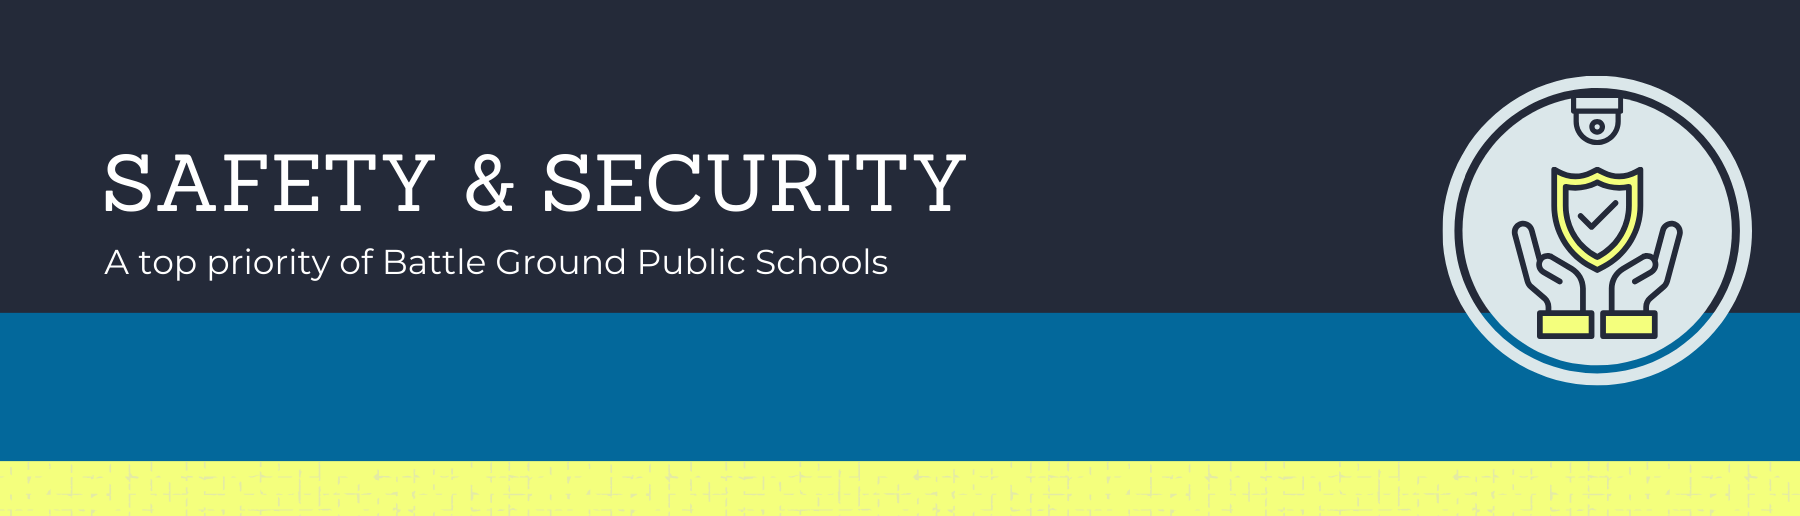 Safety-Security-logo-5